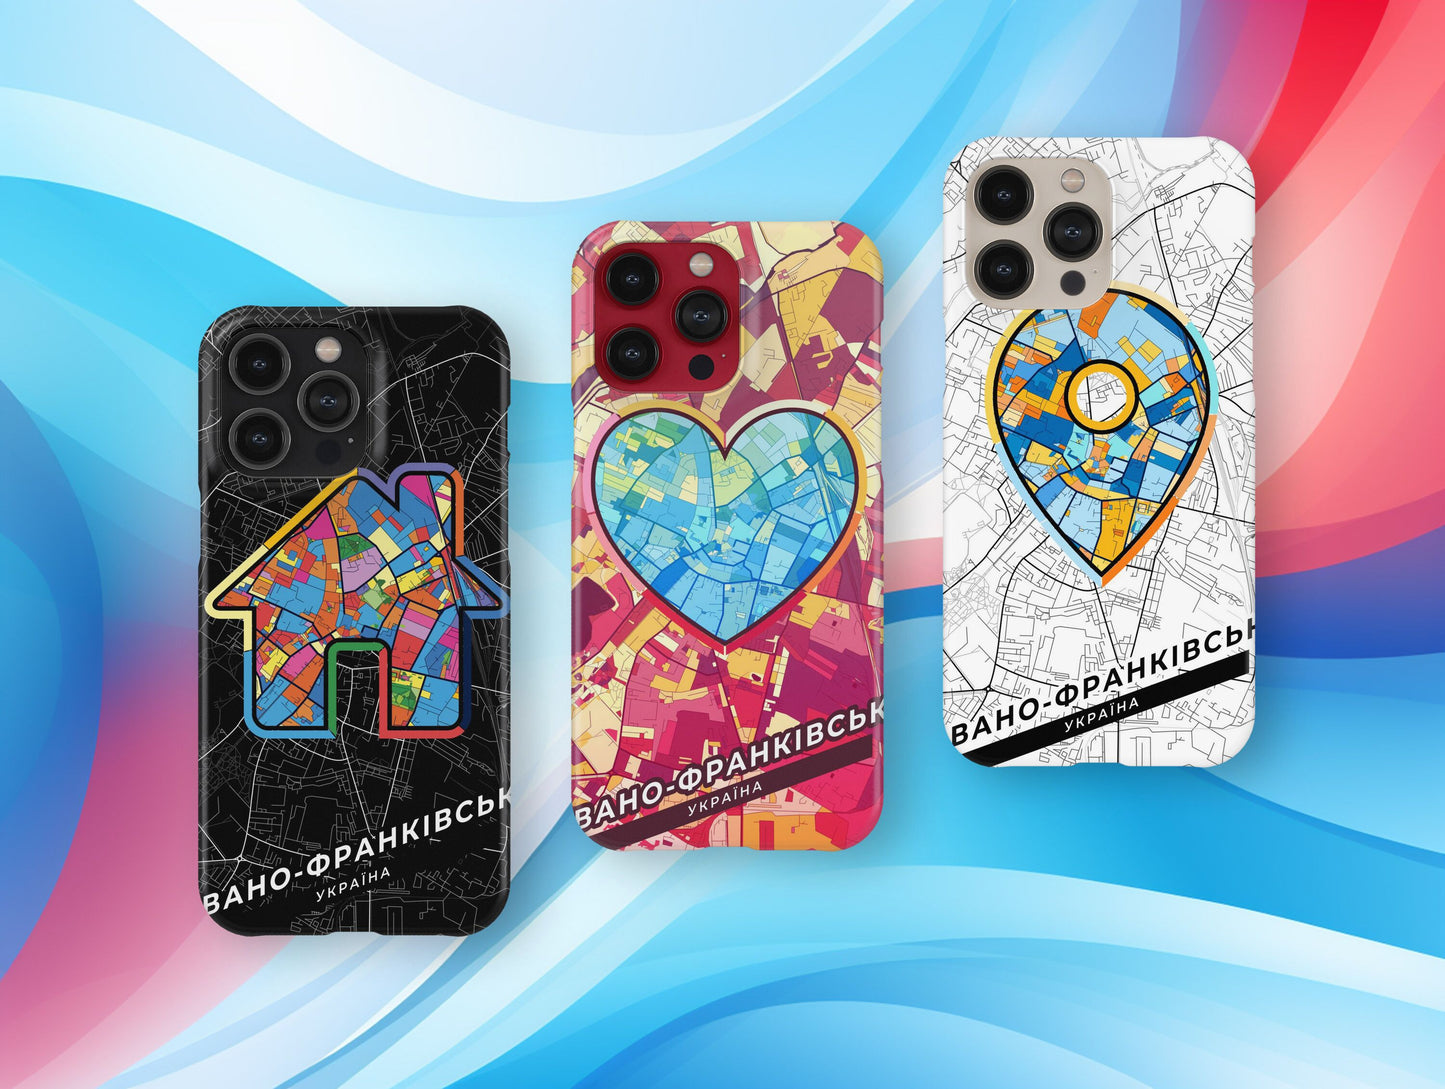 Ivano-Frankivsk Ukraine slim phone case with colorful icon. Birthday, wedding or housewarming gift. Couple match cases.